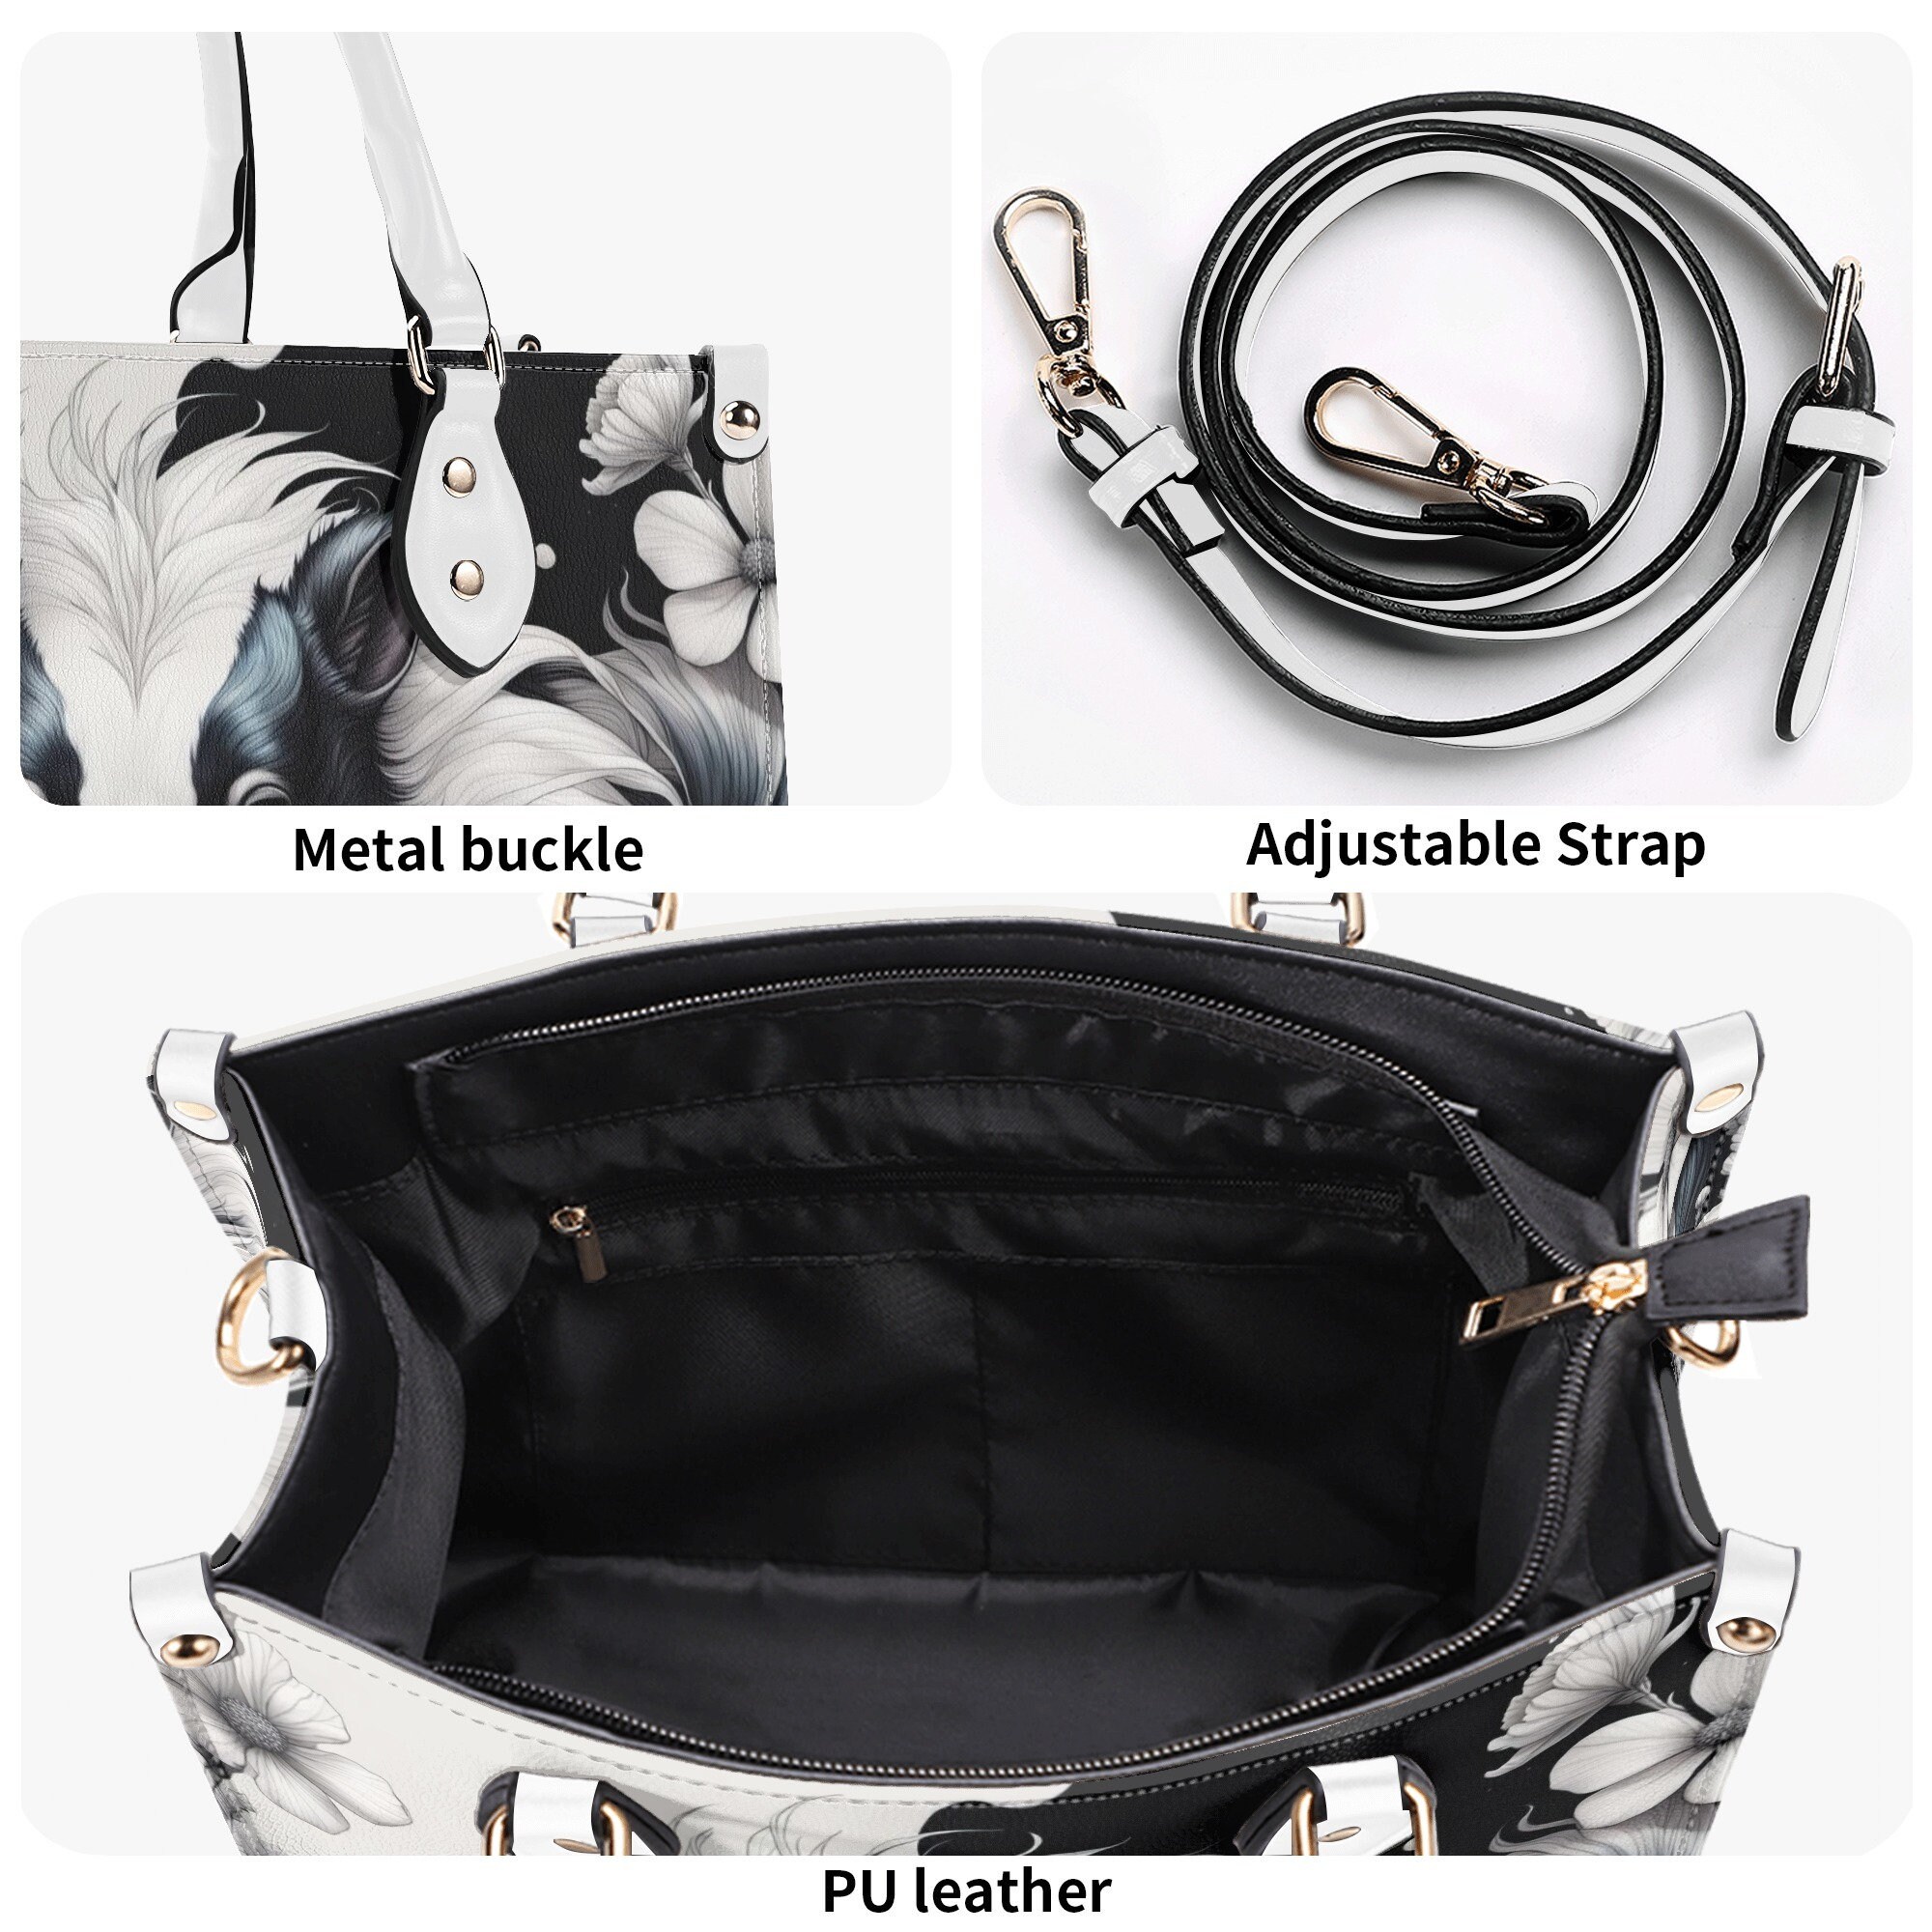 Cute Skunk Luxury Purse, Handbag, Vegan Leather Cottagecore Bag, Animals Shoulder Bag